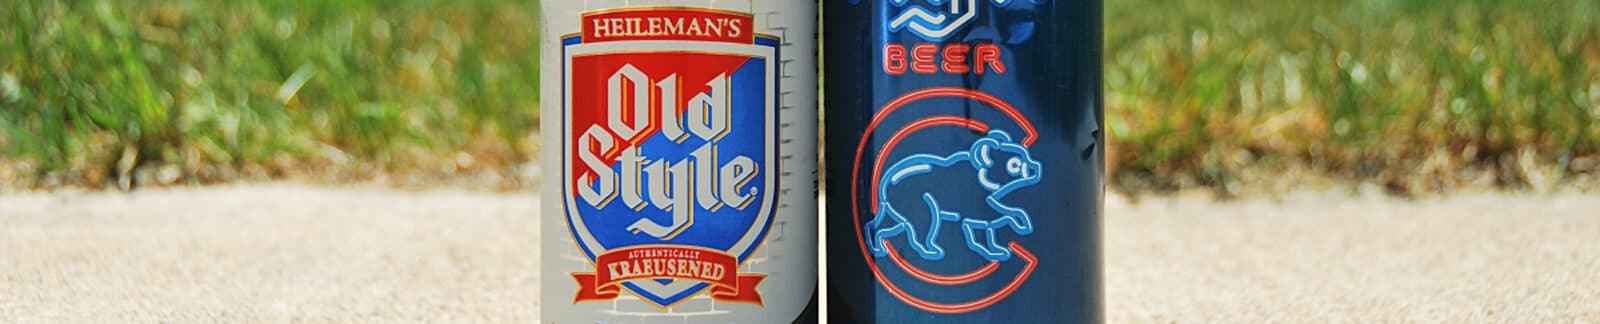 Heileman's Old Style Beer header